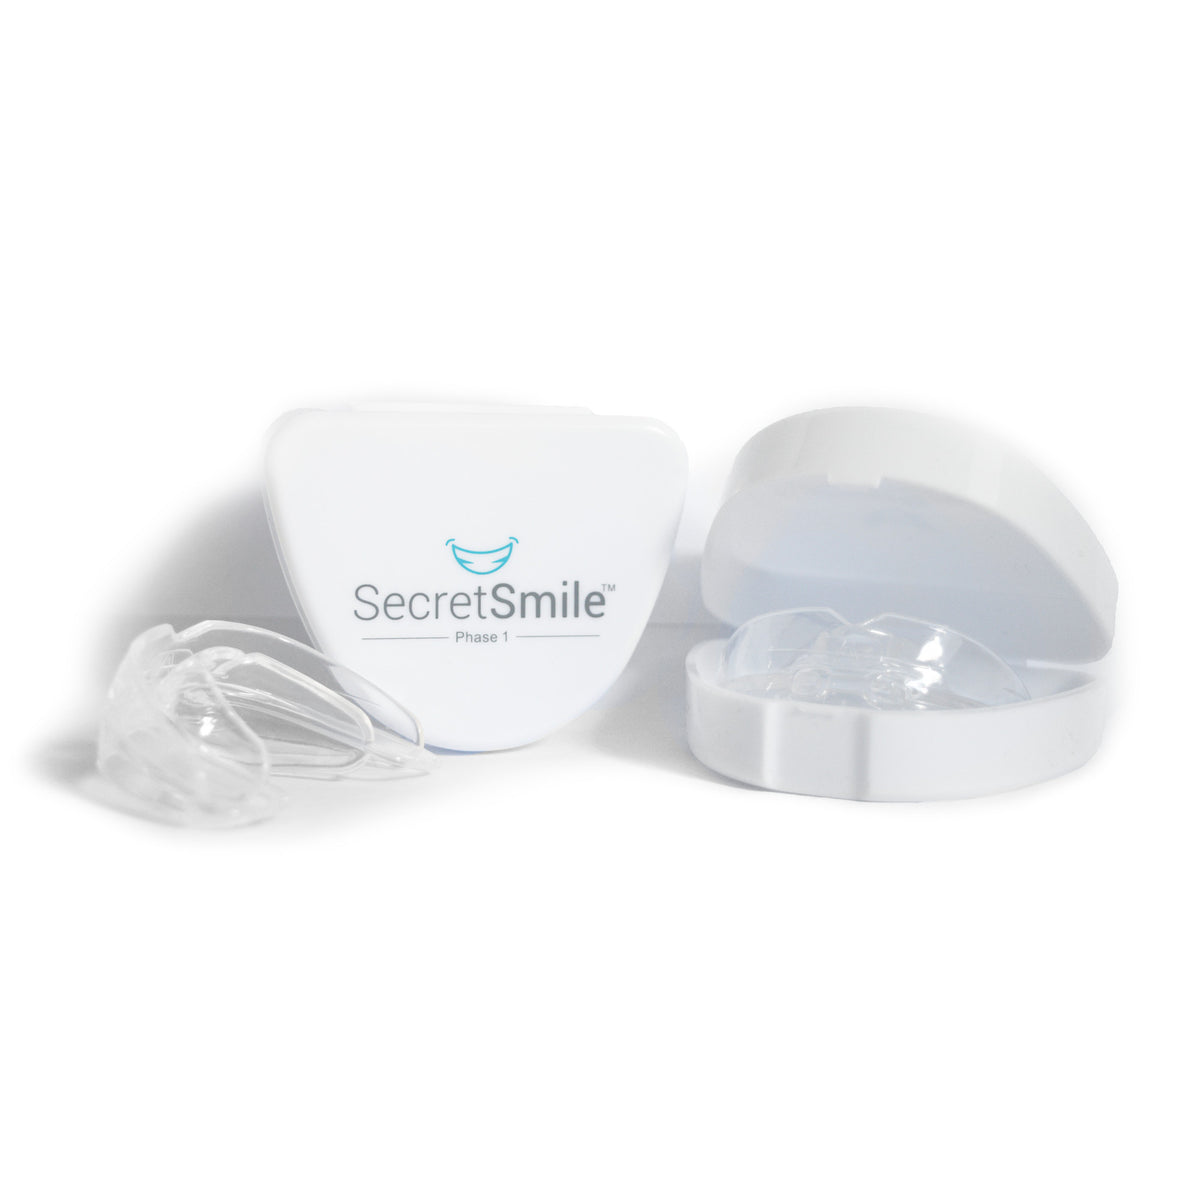 teeth aligner set in tray with logo secretsmile